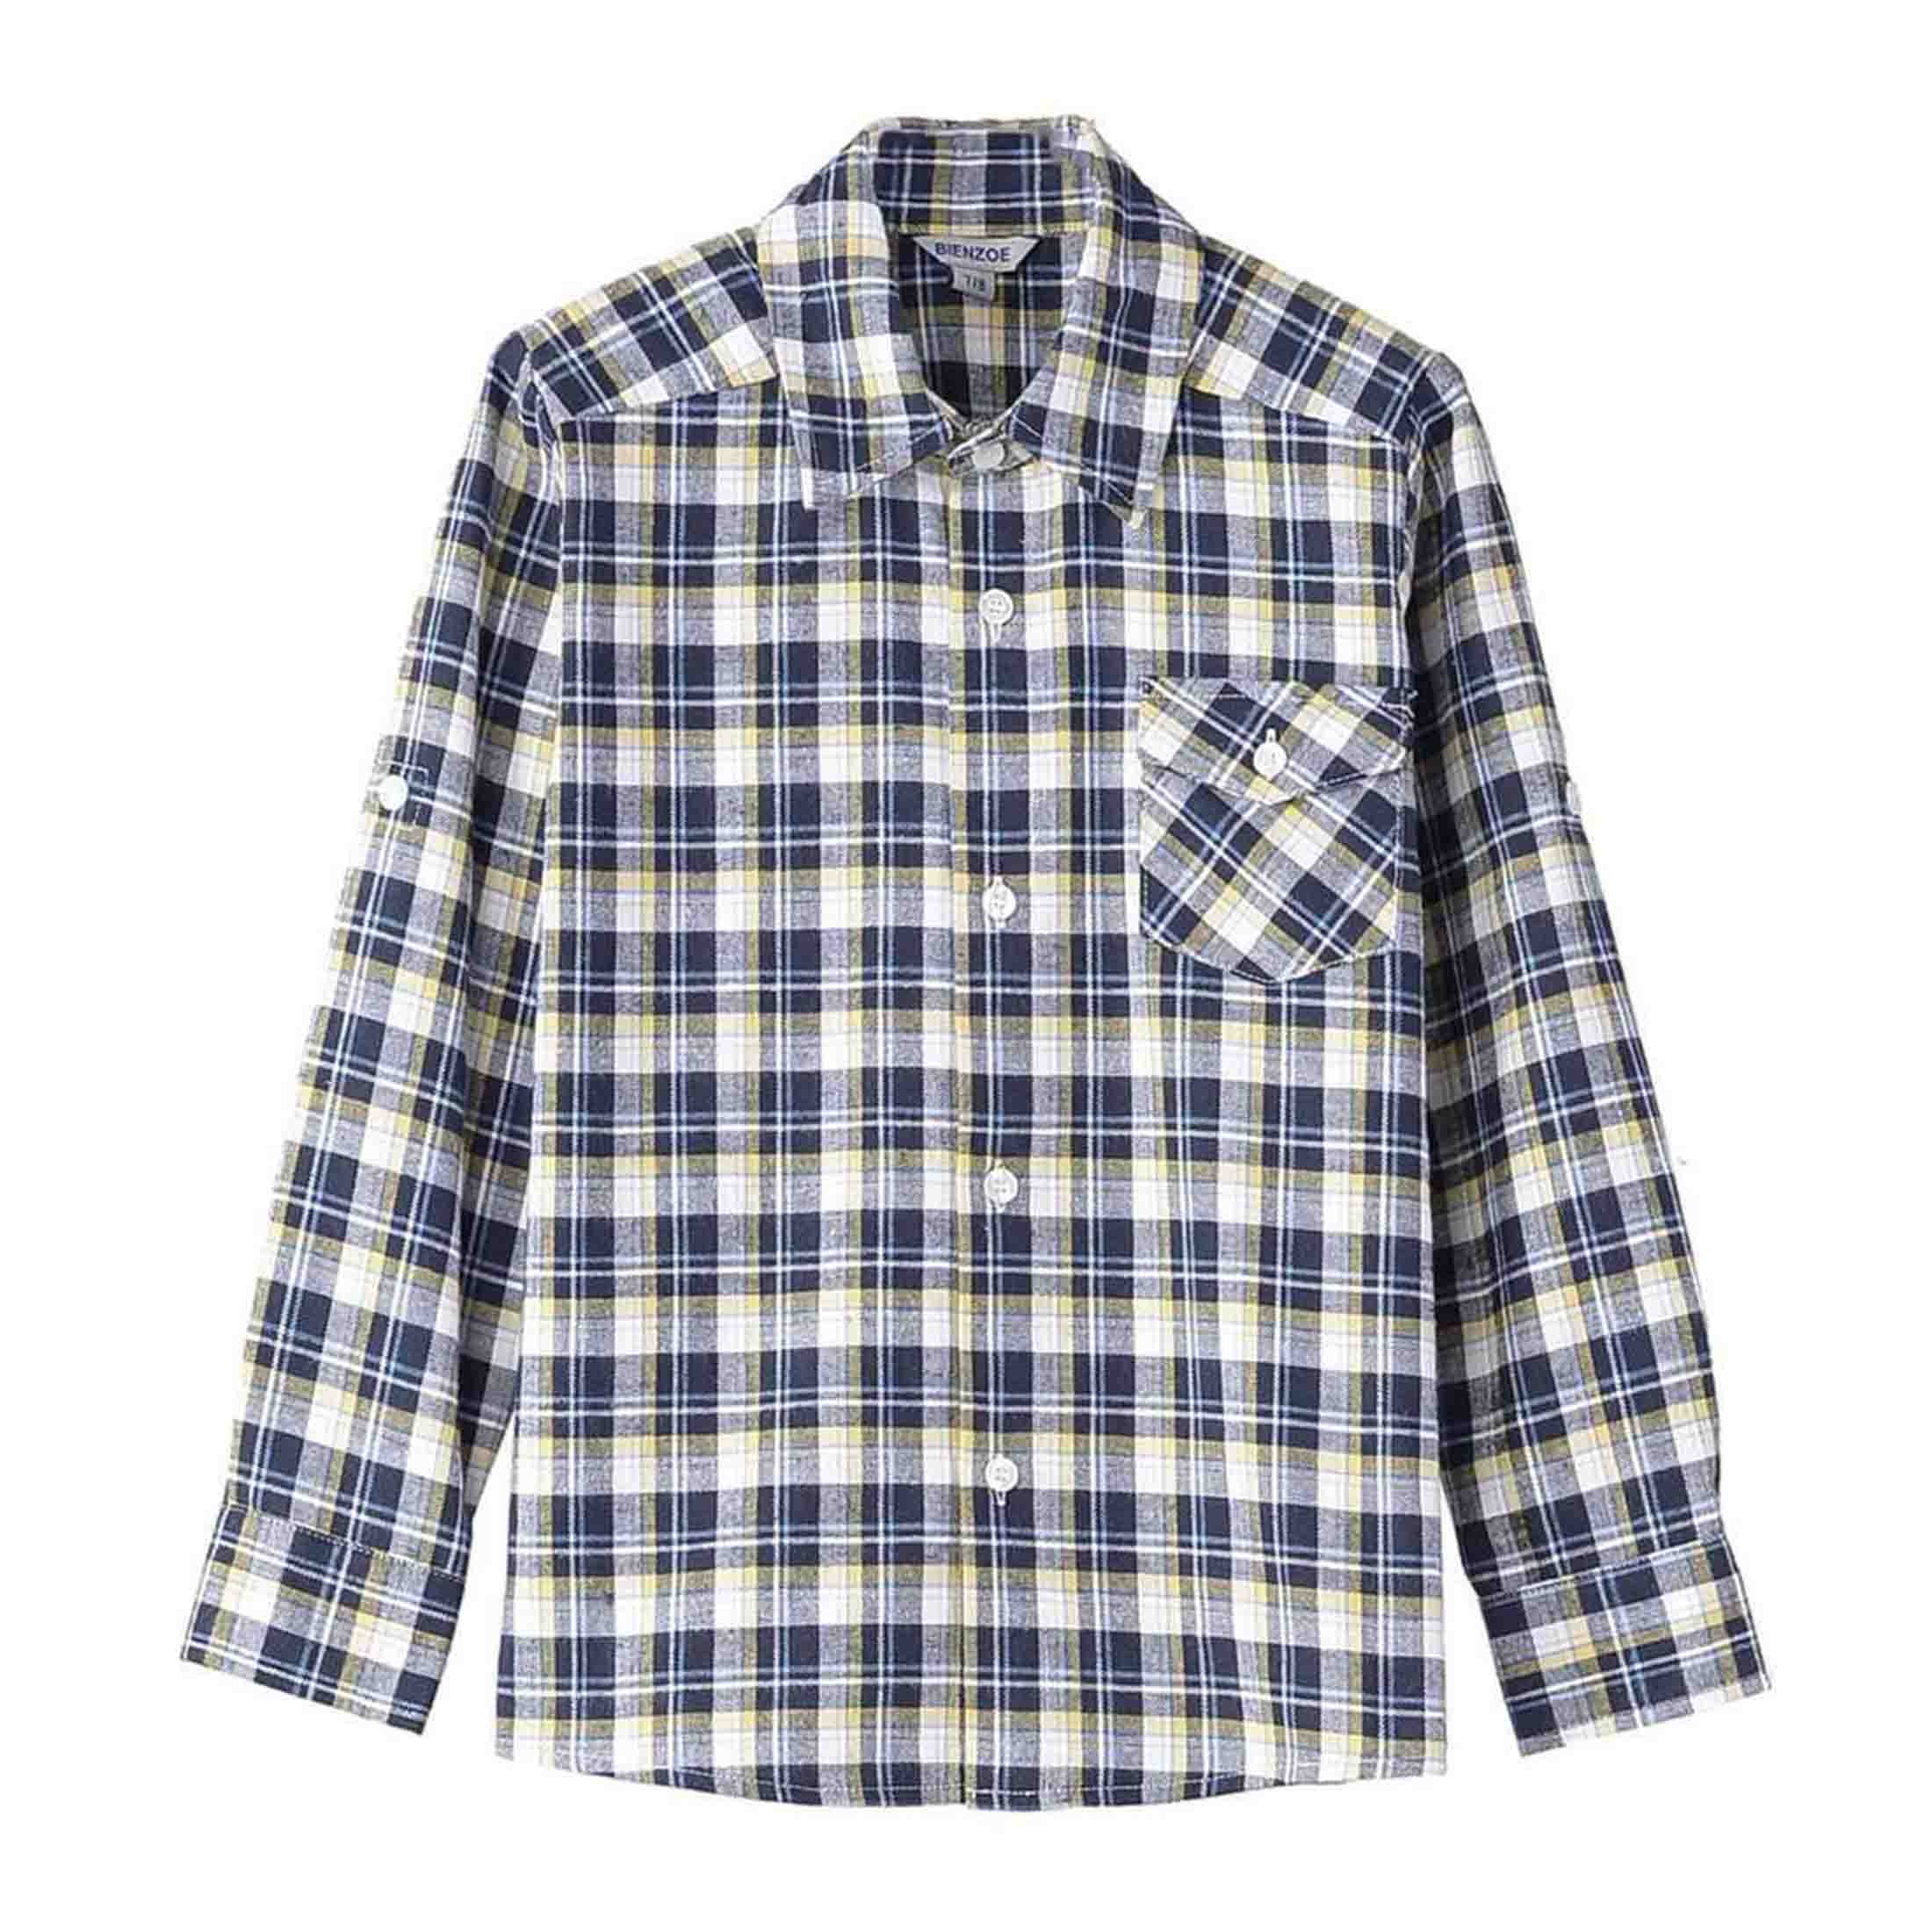 Bienzoe Boy's Warm Flannel Button Down Long Sleeve Plaid Shirt